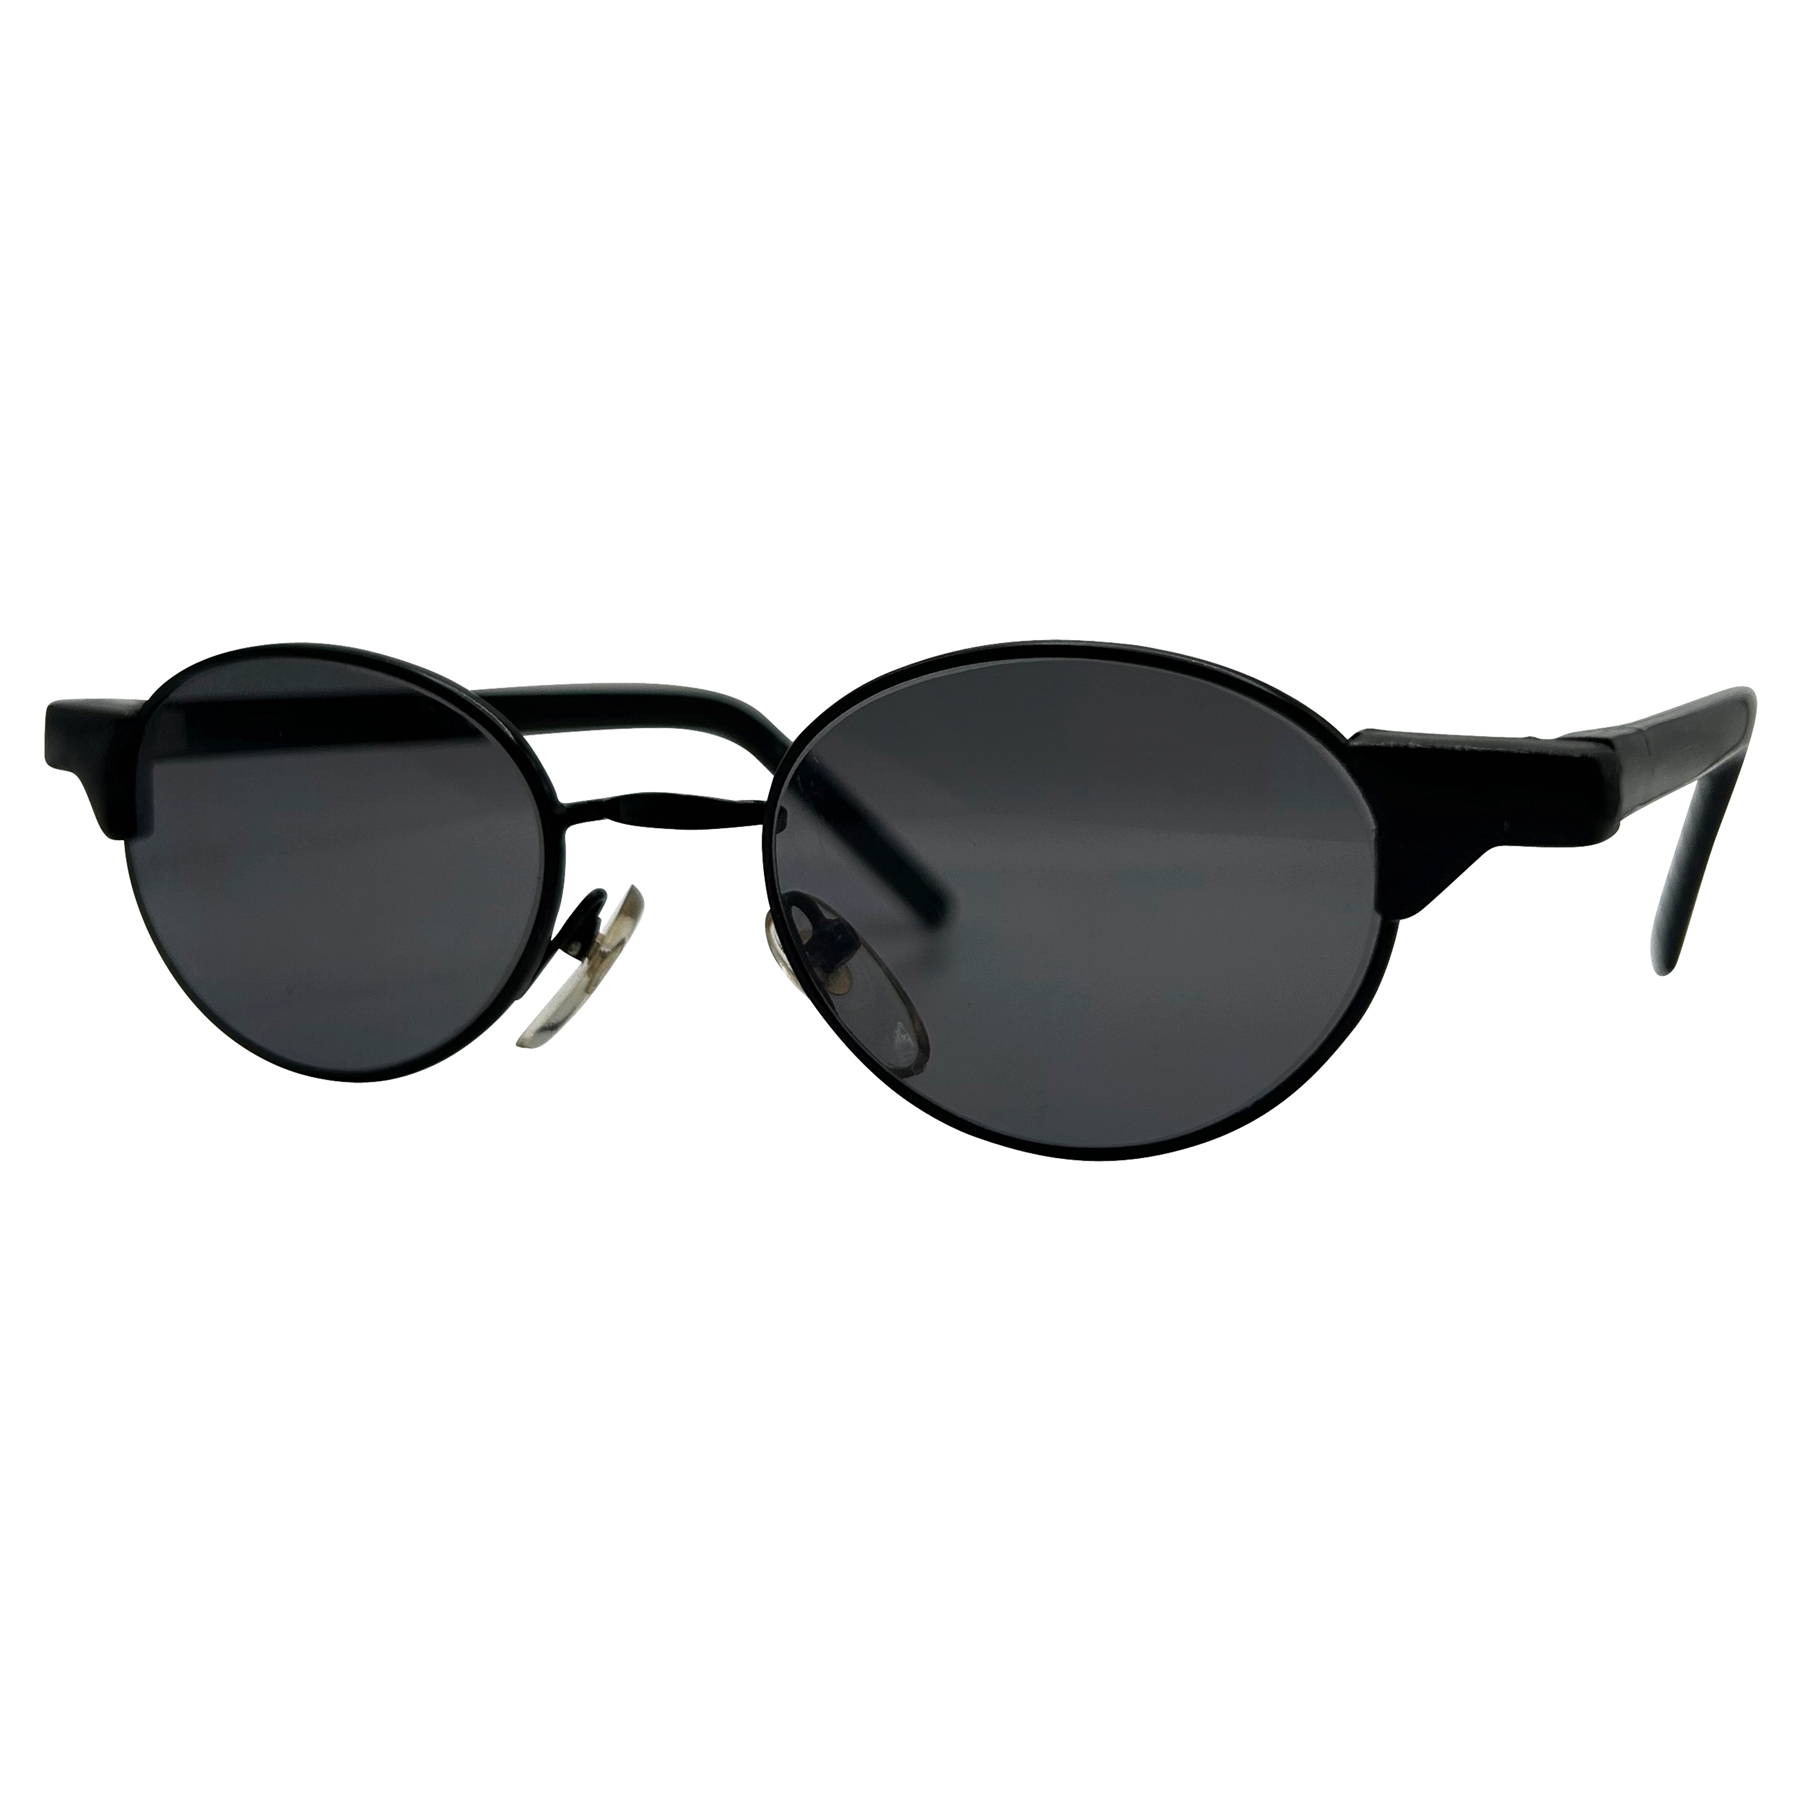 CESSNA Black/Super Dark Oval Sunglasses